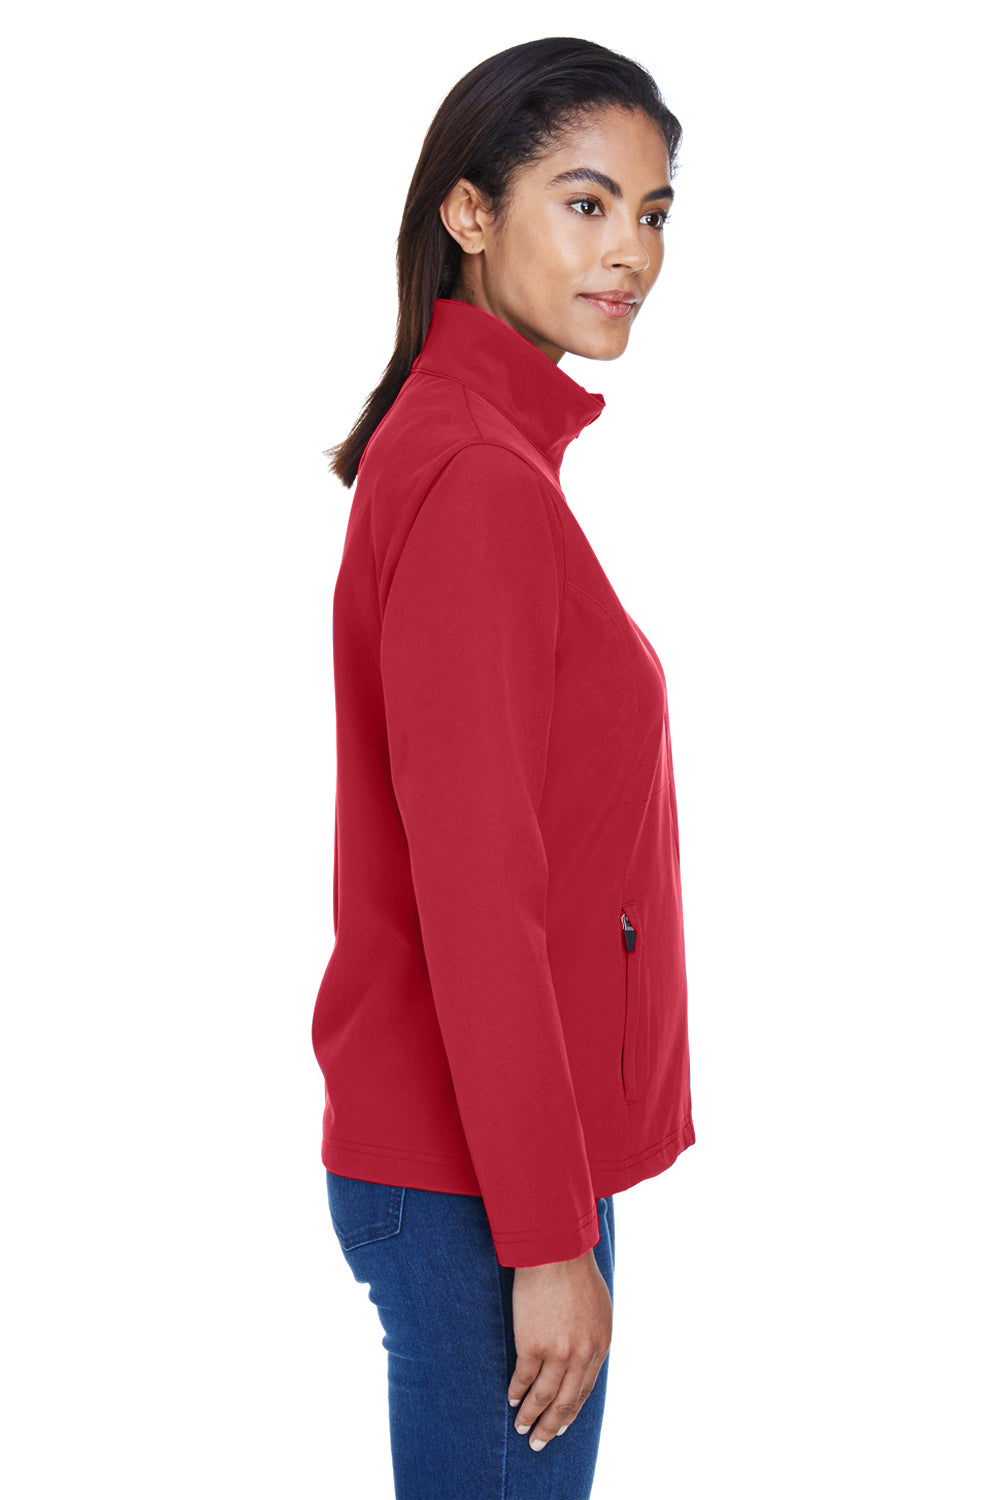 Team 365 TT80W Womens Leader Waterproof Full Zip Jacket Scarlet Red Side